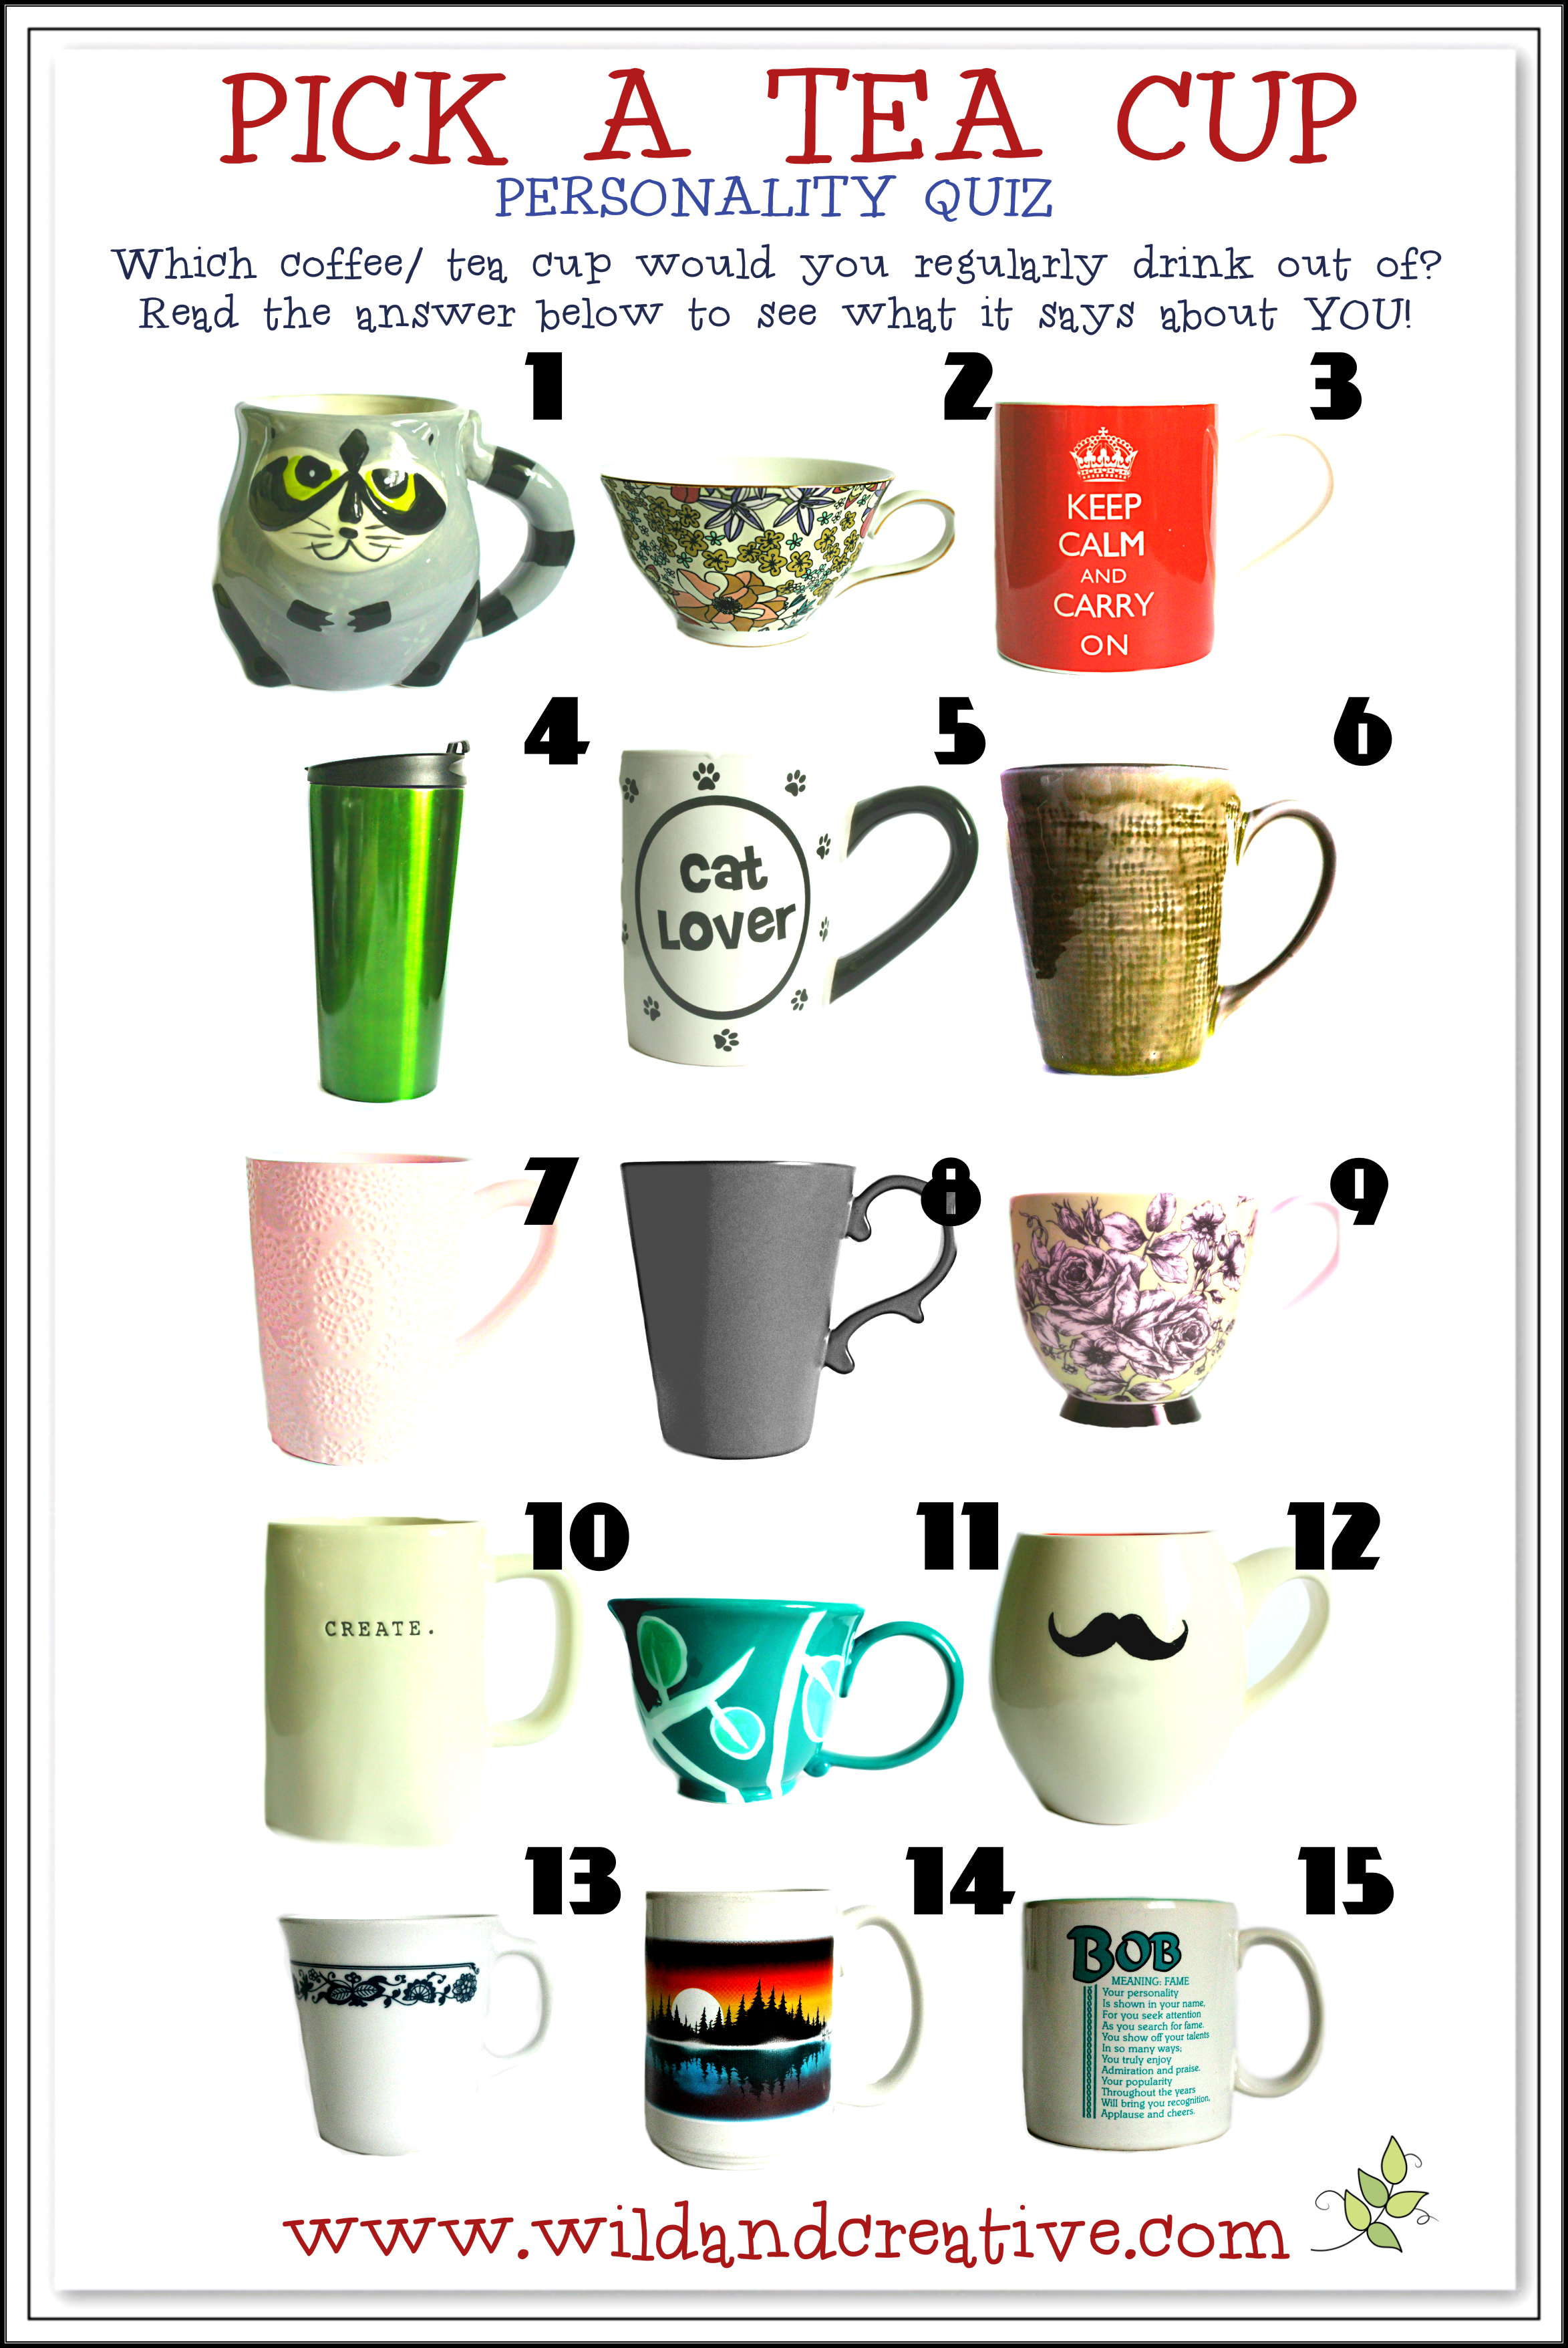 How to choose a tea mug? - Buying guide